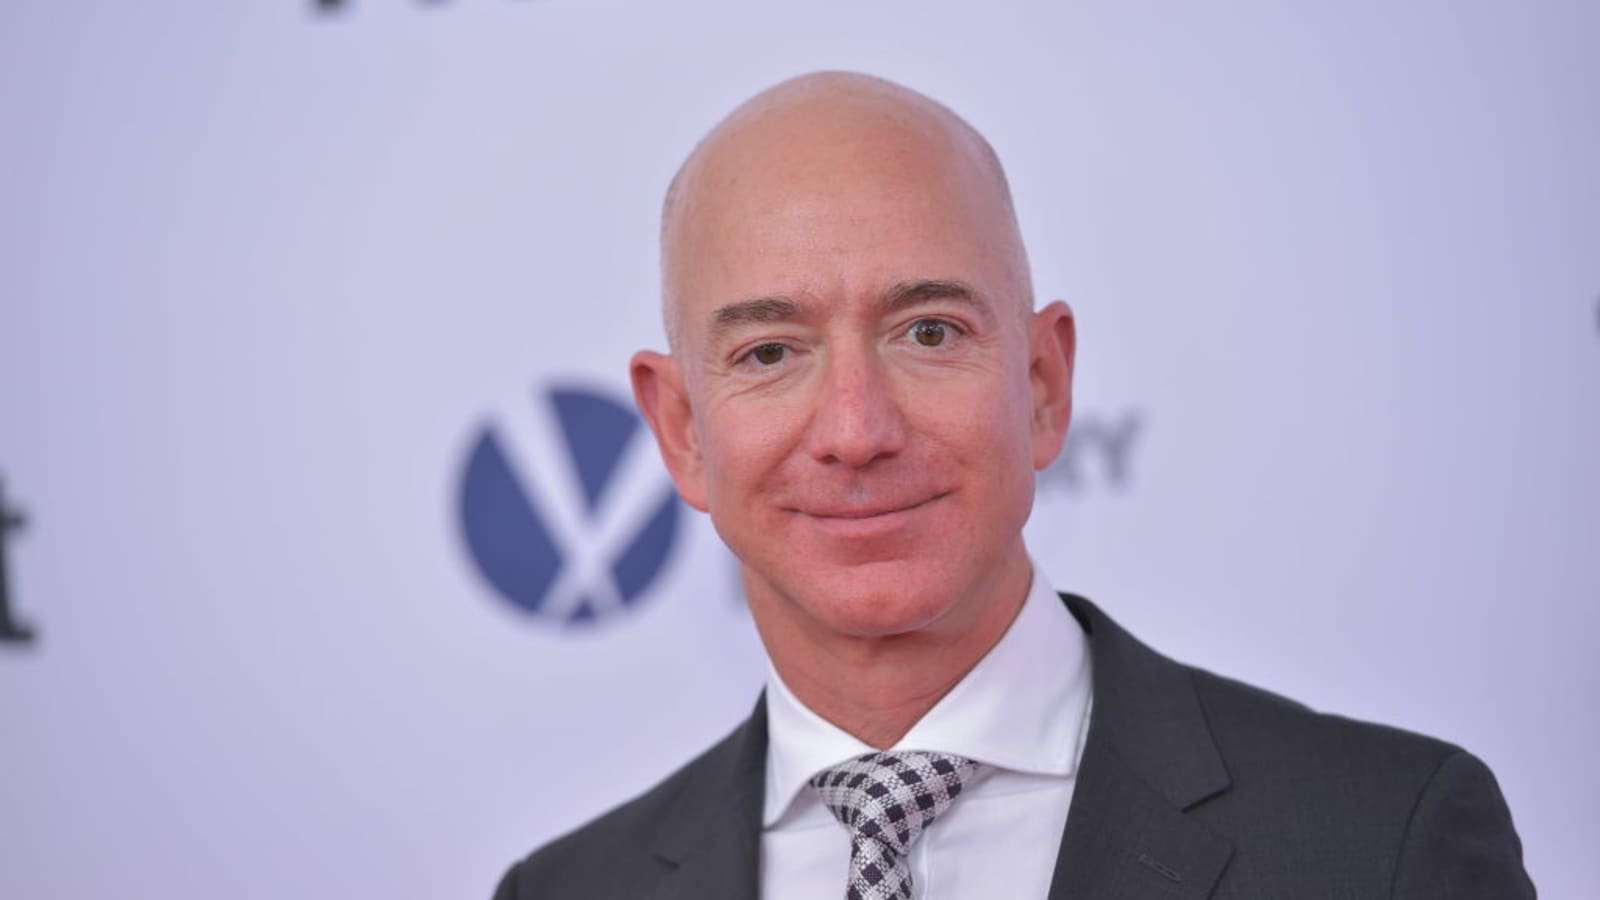 The inspiring quote Amazon CEO Jeff Bezos keeps on his fridge